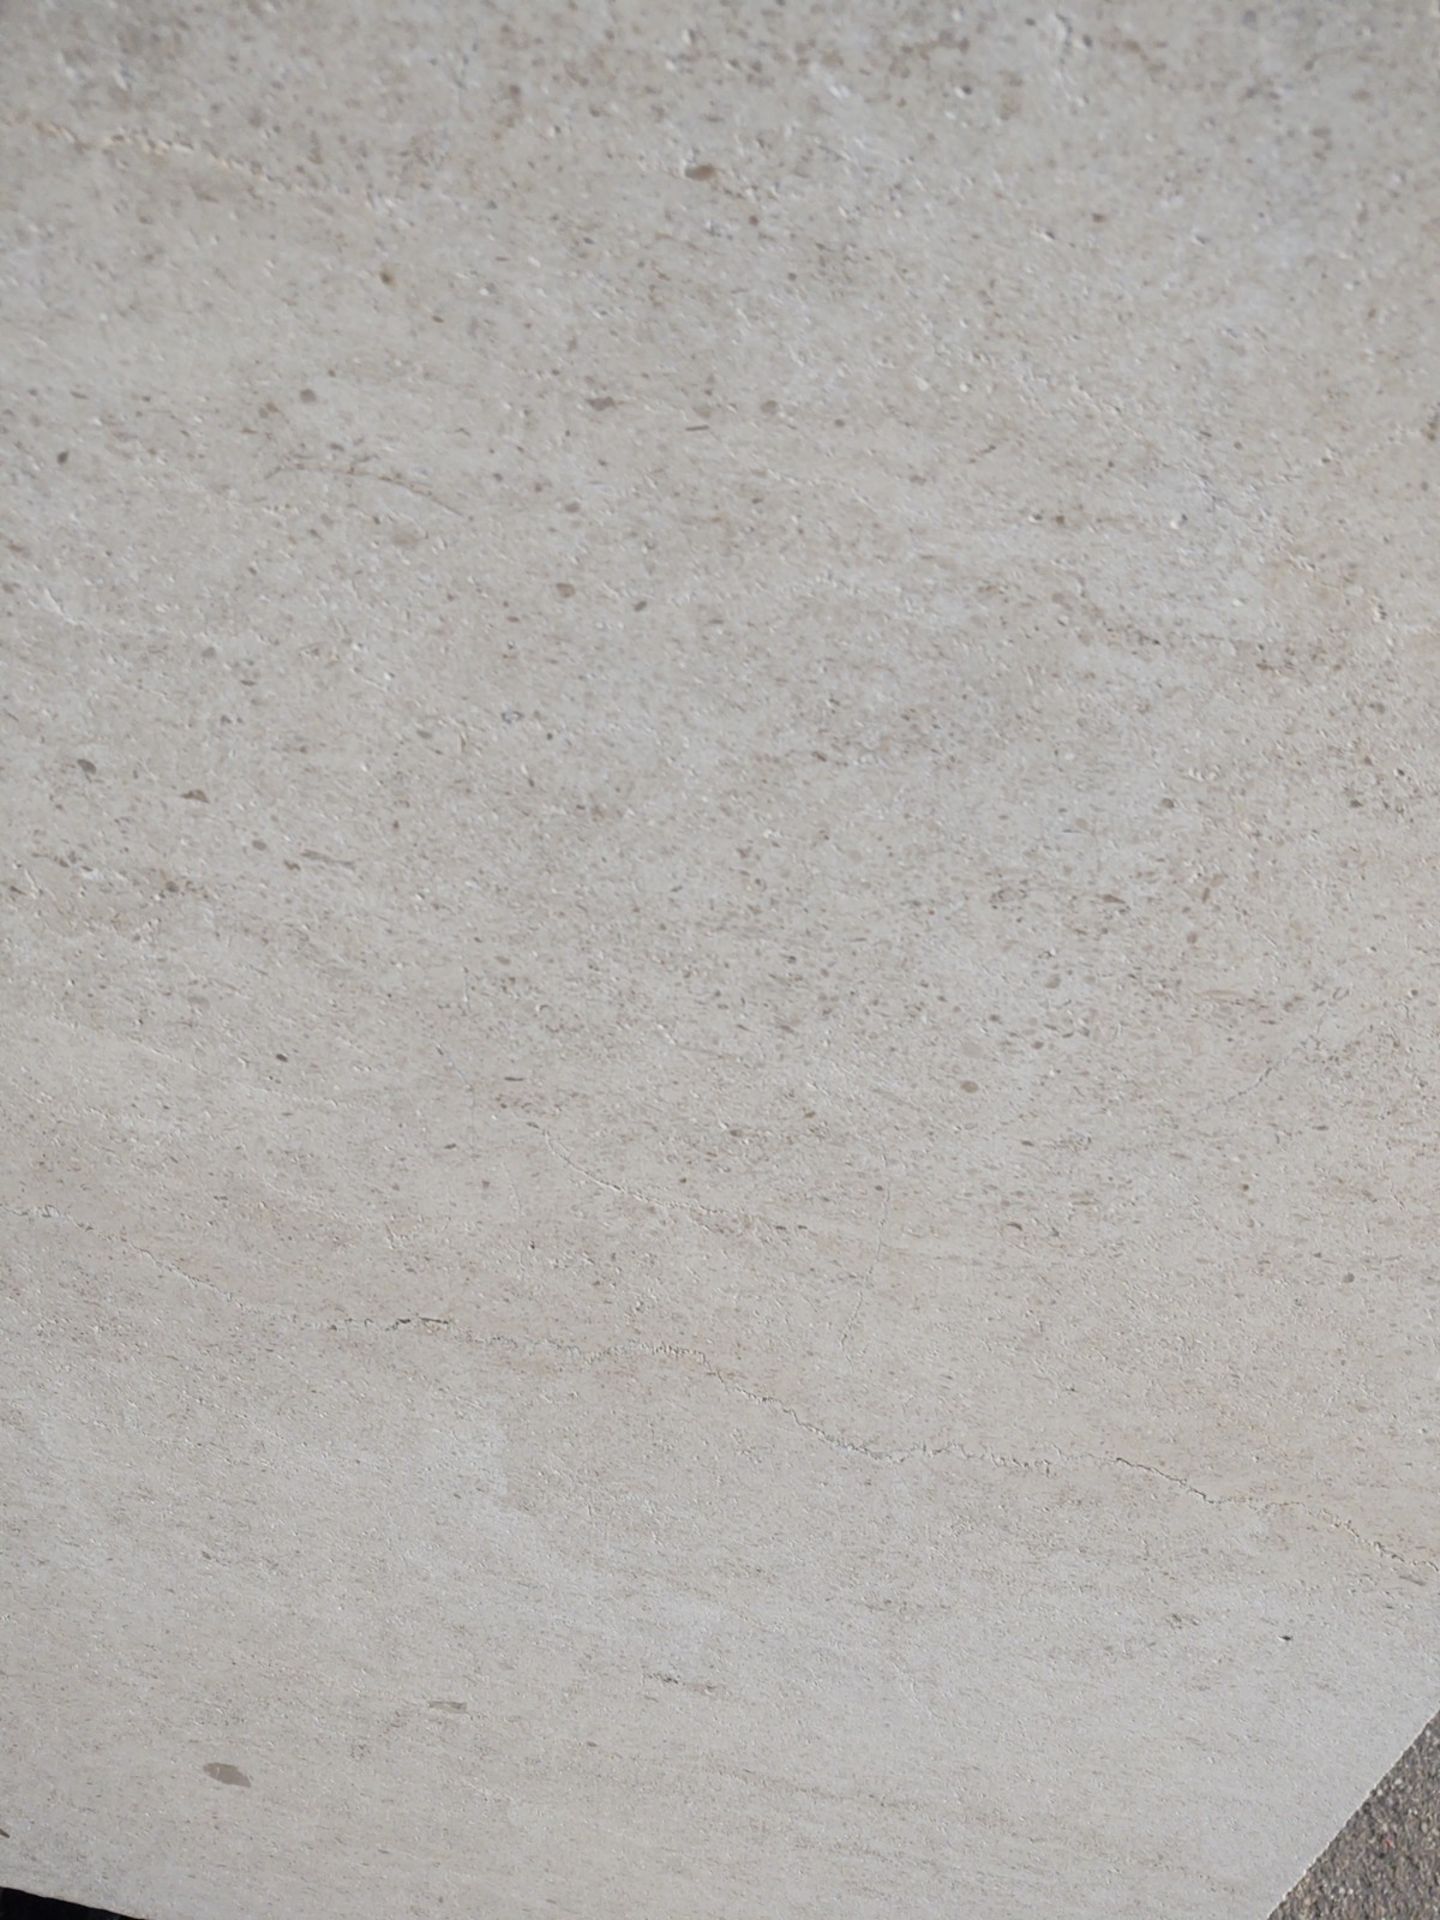 Gascone Beige French Limestone 5CM-H, 103x55" - Image 2 of 3